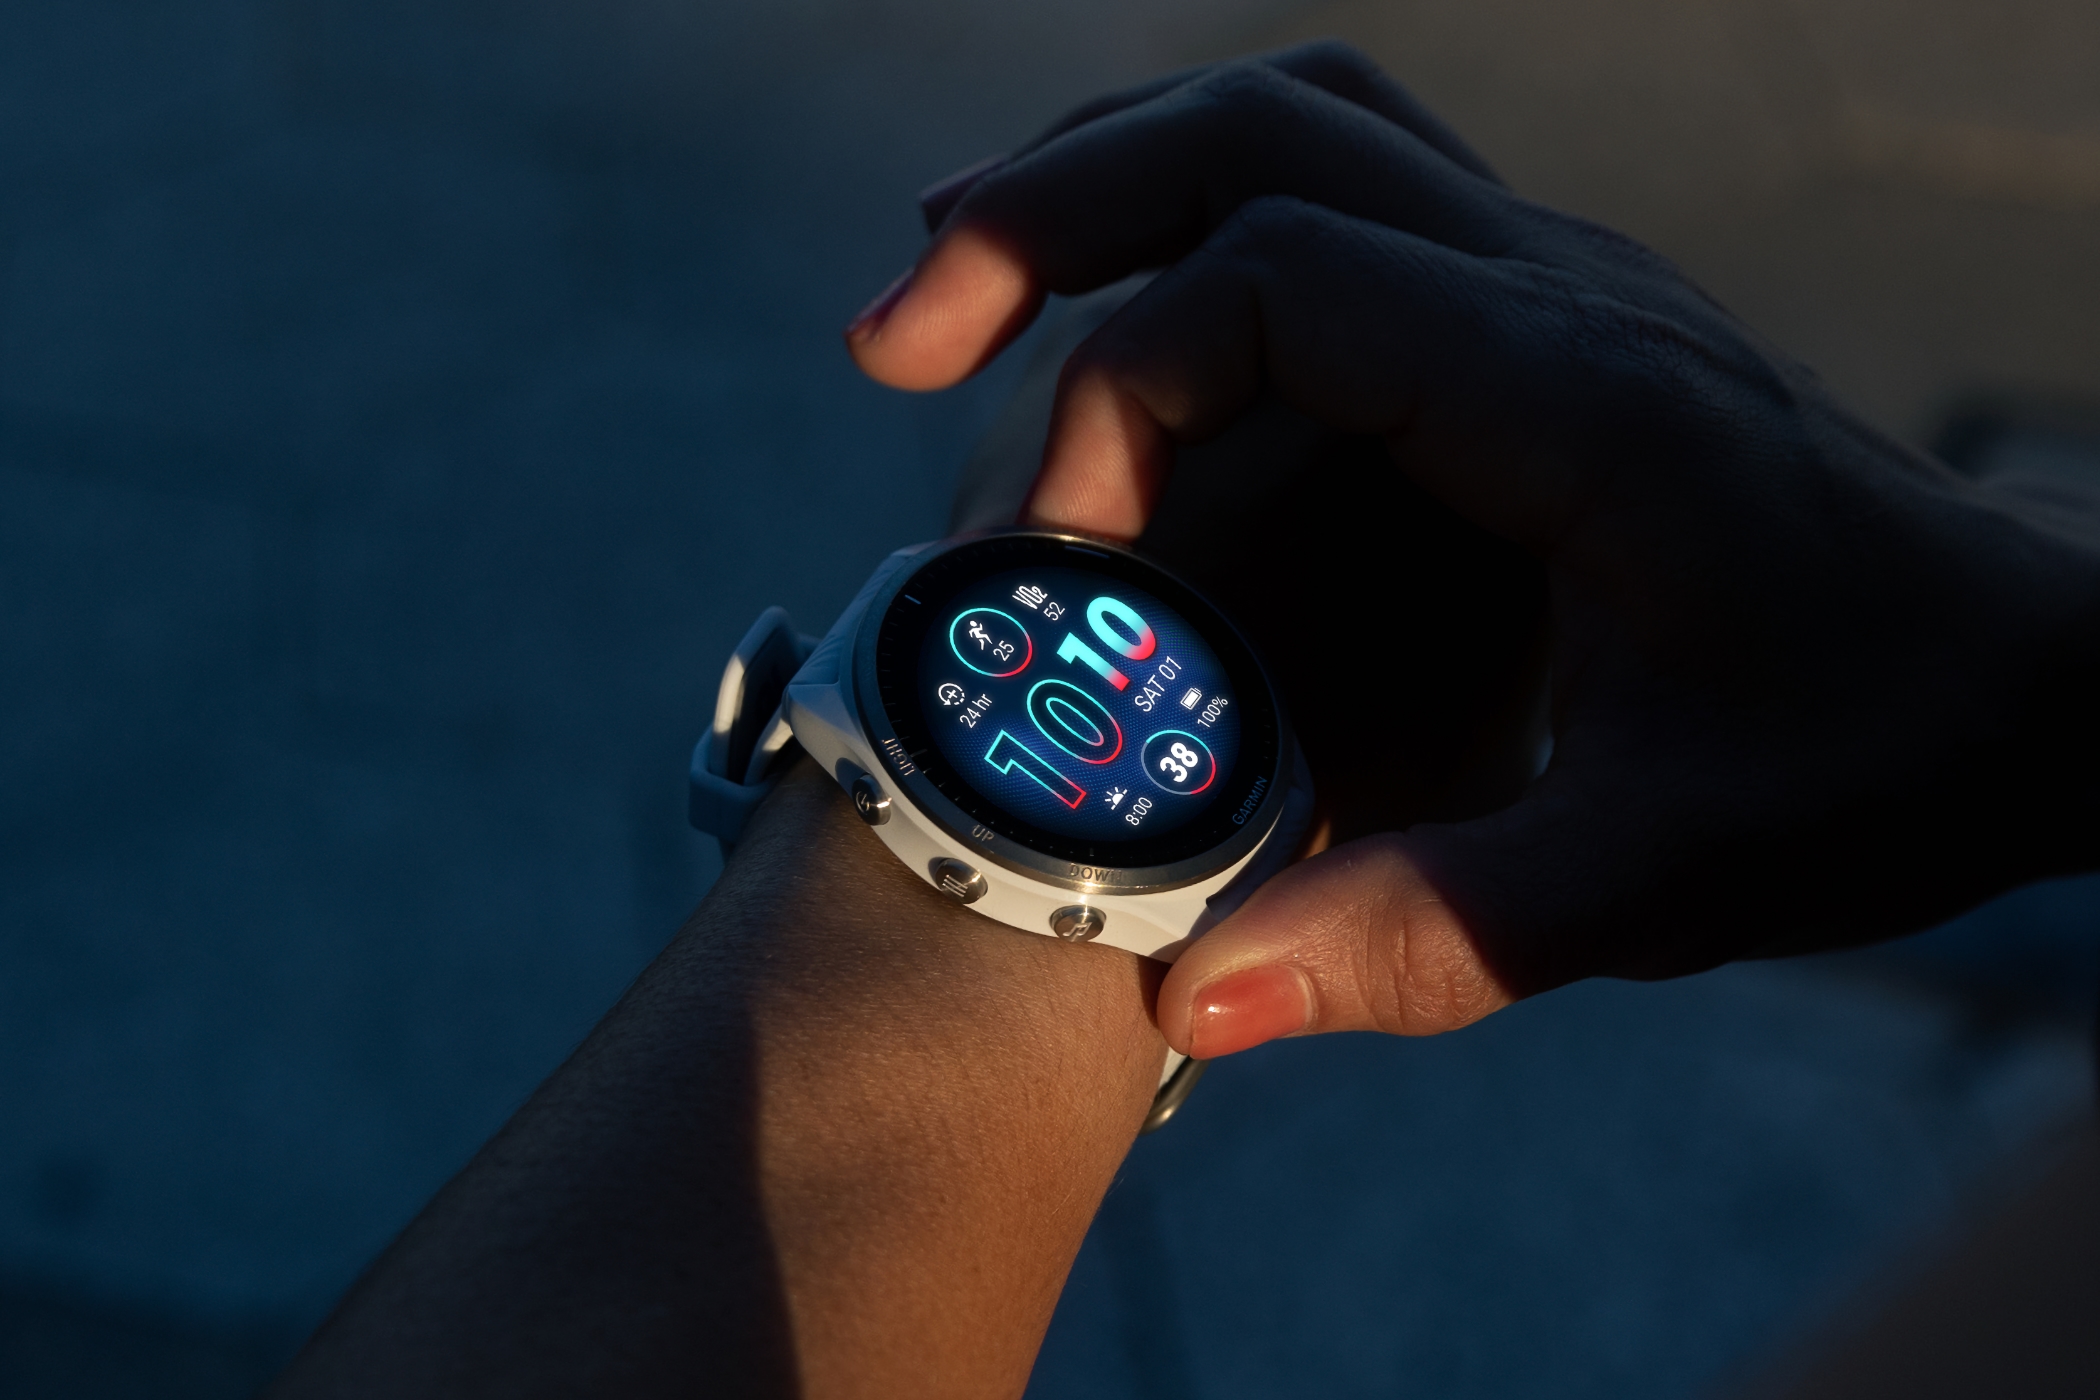  Garmin Forerunner 265 Running Smartwatch, Colorful